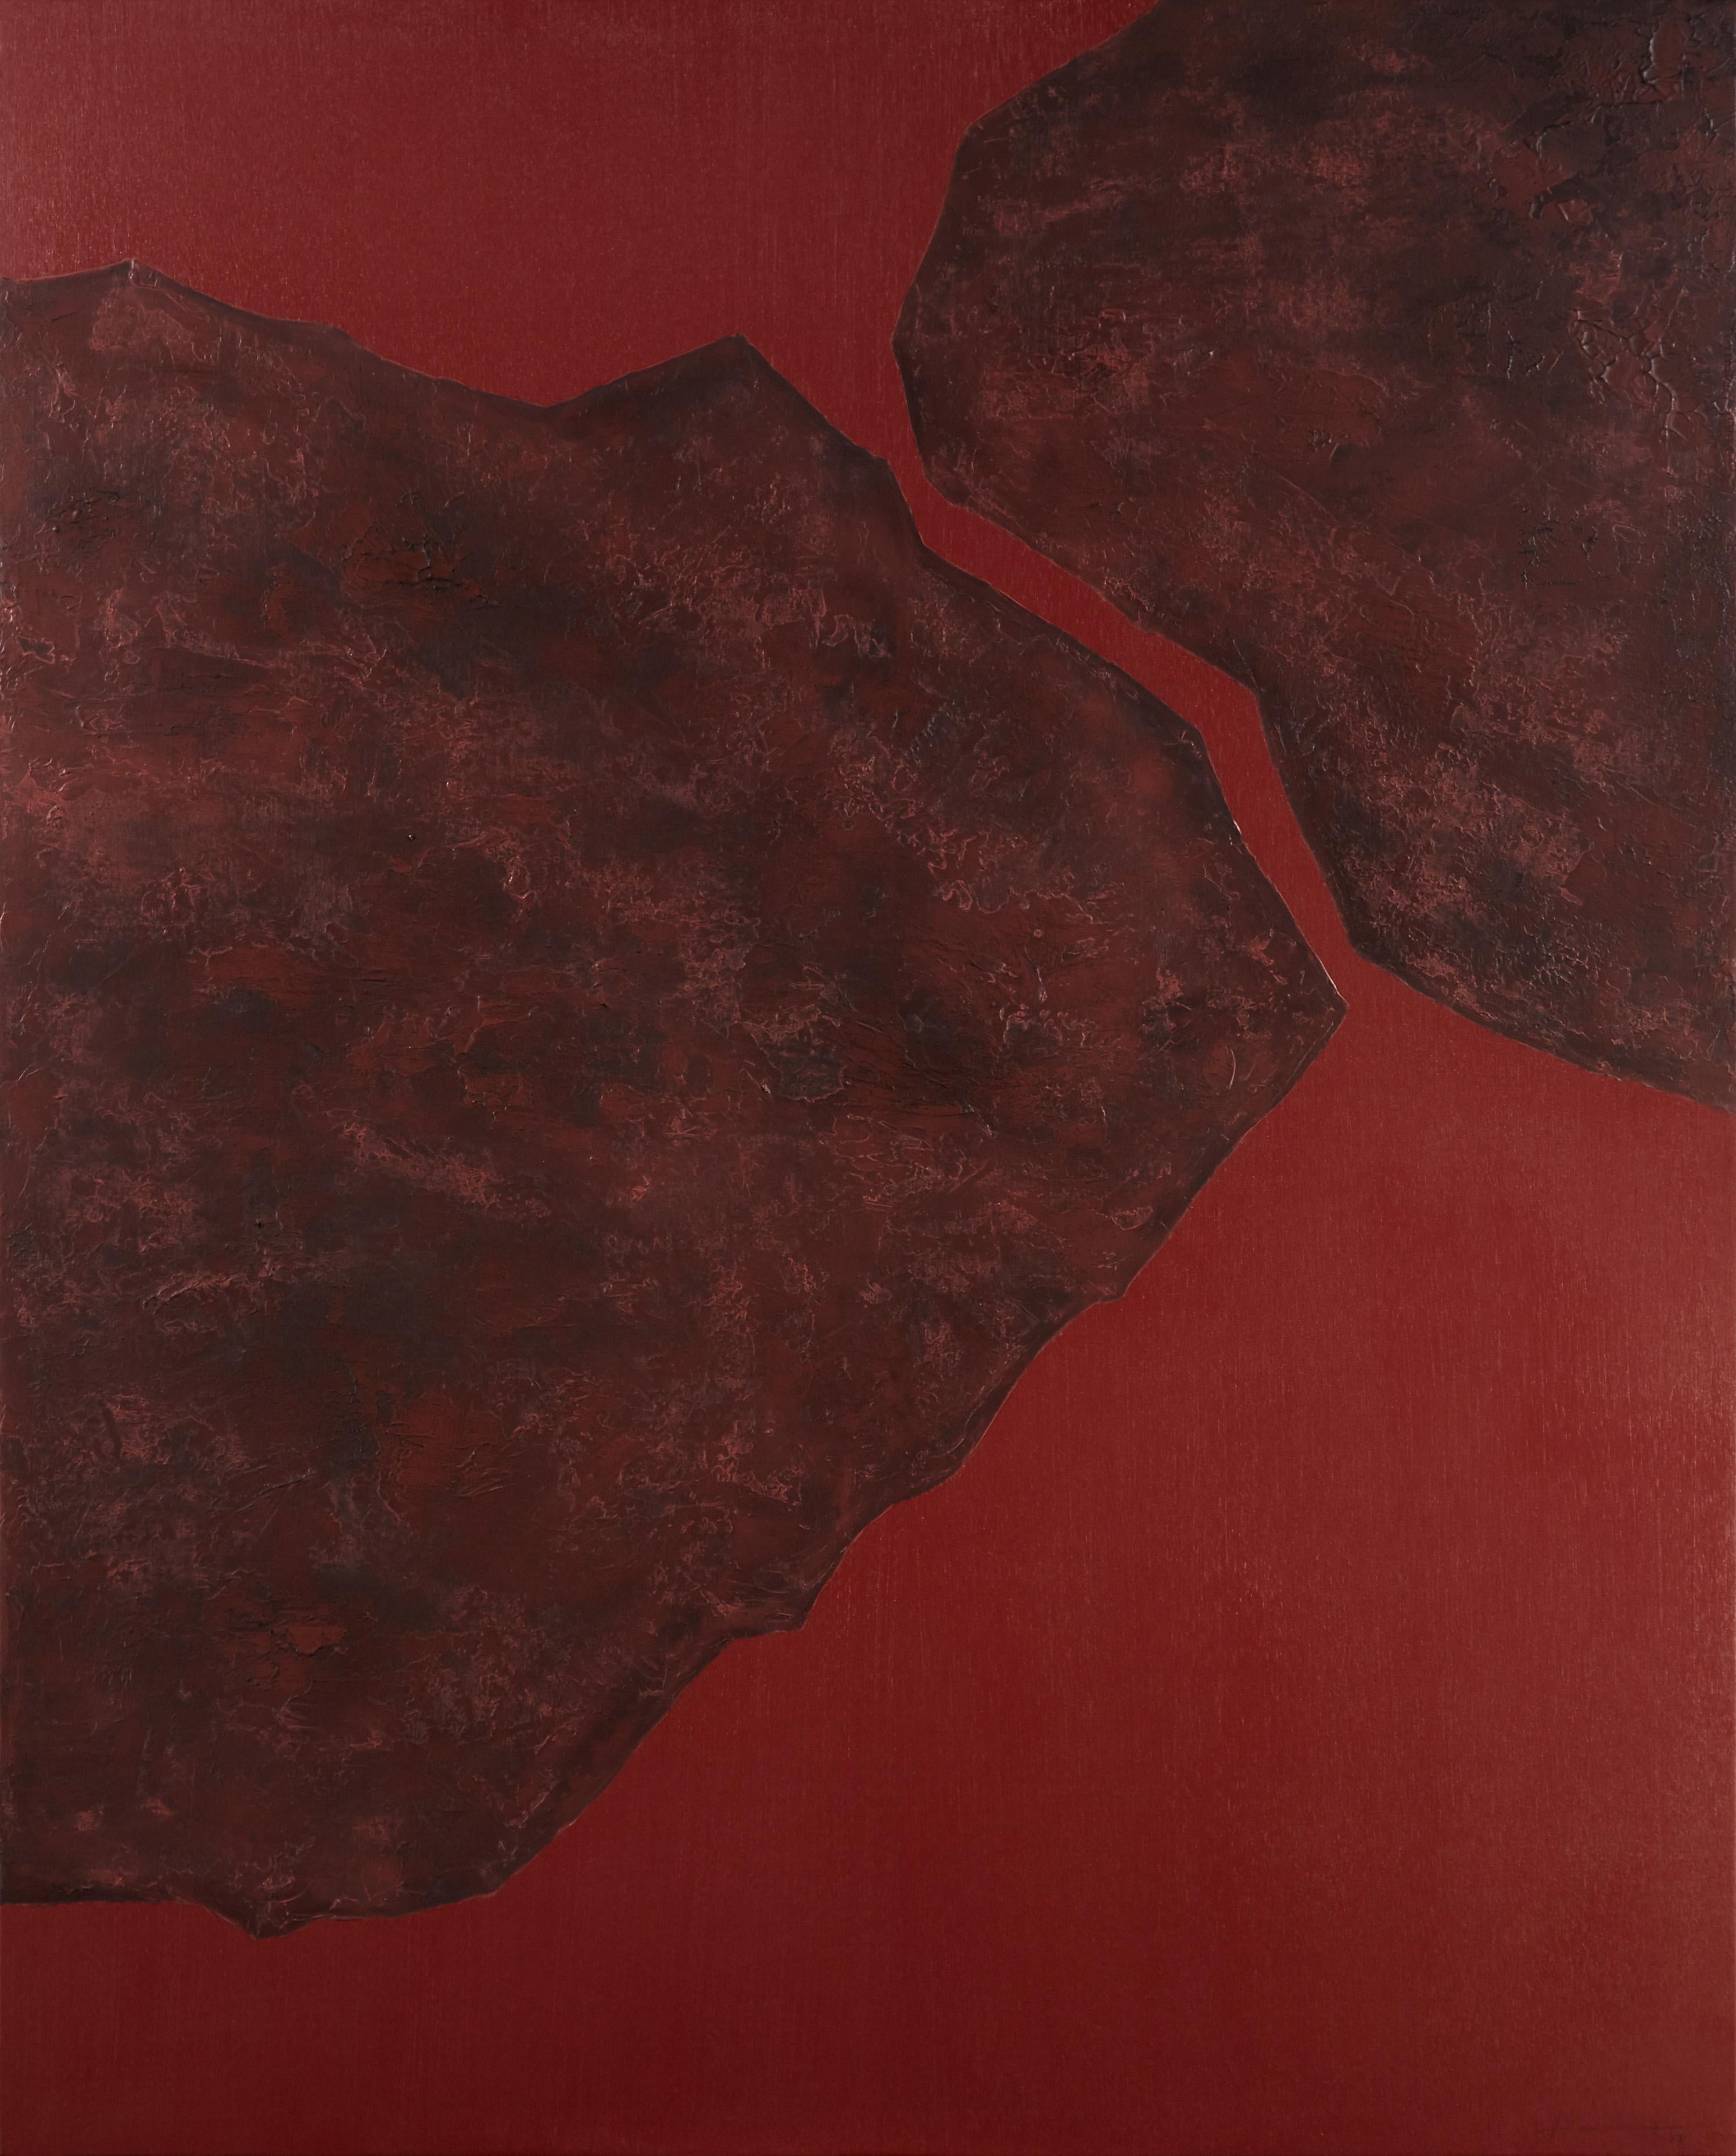 Stones XXV - 21st Century, Contemporary, Abstract Painting, Mixed Media